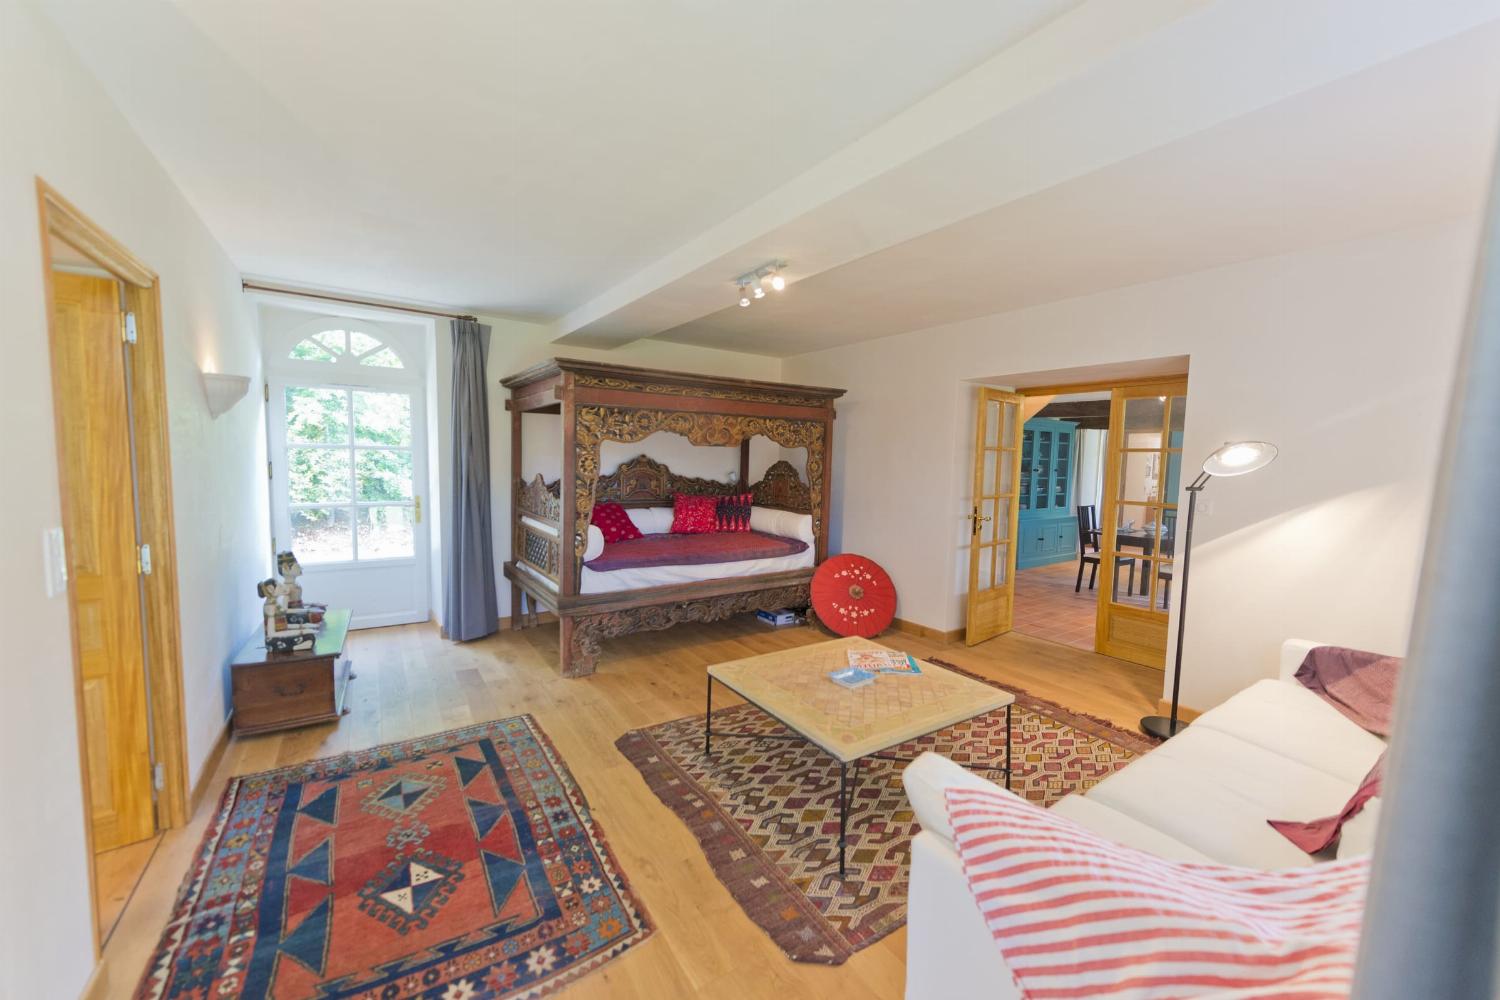 Living room | Rental home in Loire